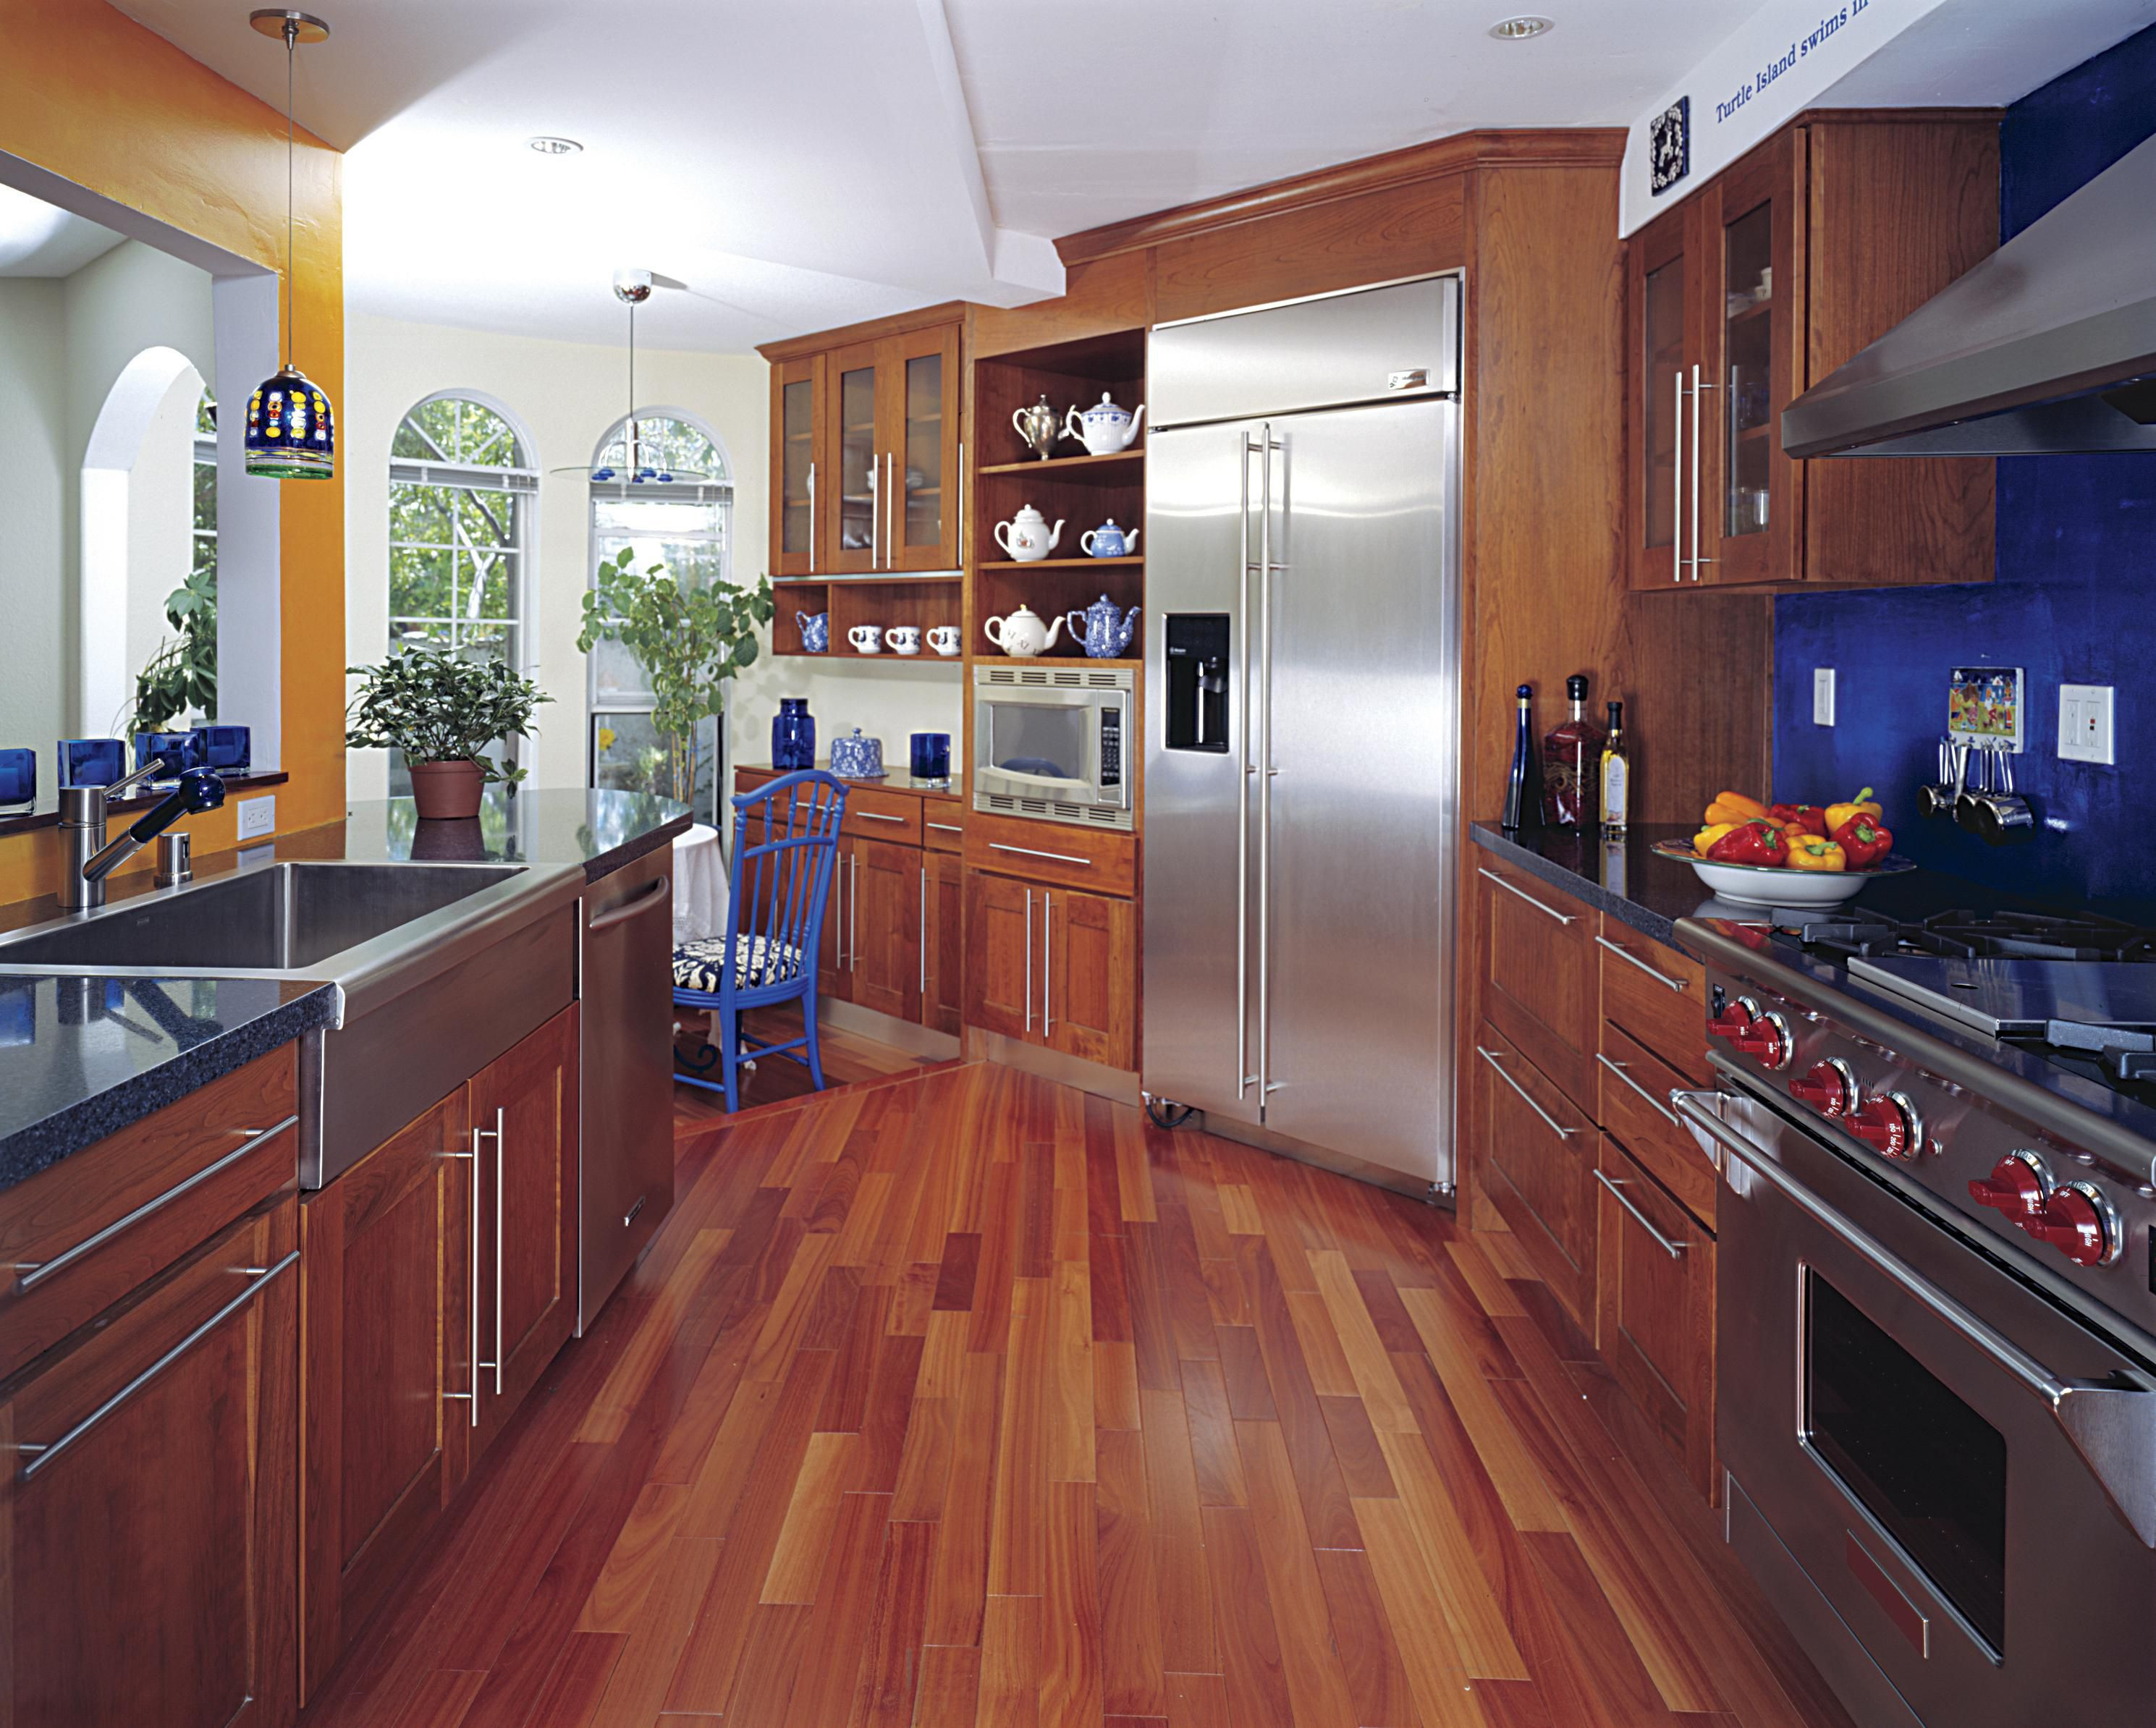 15 Elegant Types Of Dark Hardwood Floors 2024 free download types of dark hardwood floors of hardwood floor in a kitchen is this allowed regarding 186828472 56a49f3a5f9b58b7d0d7e142